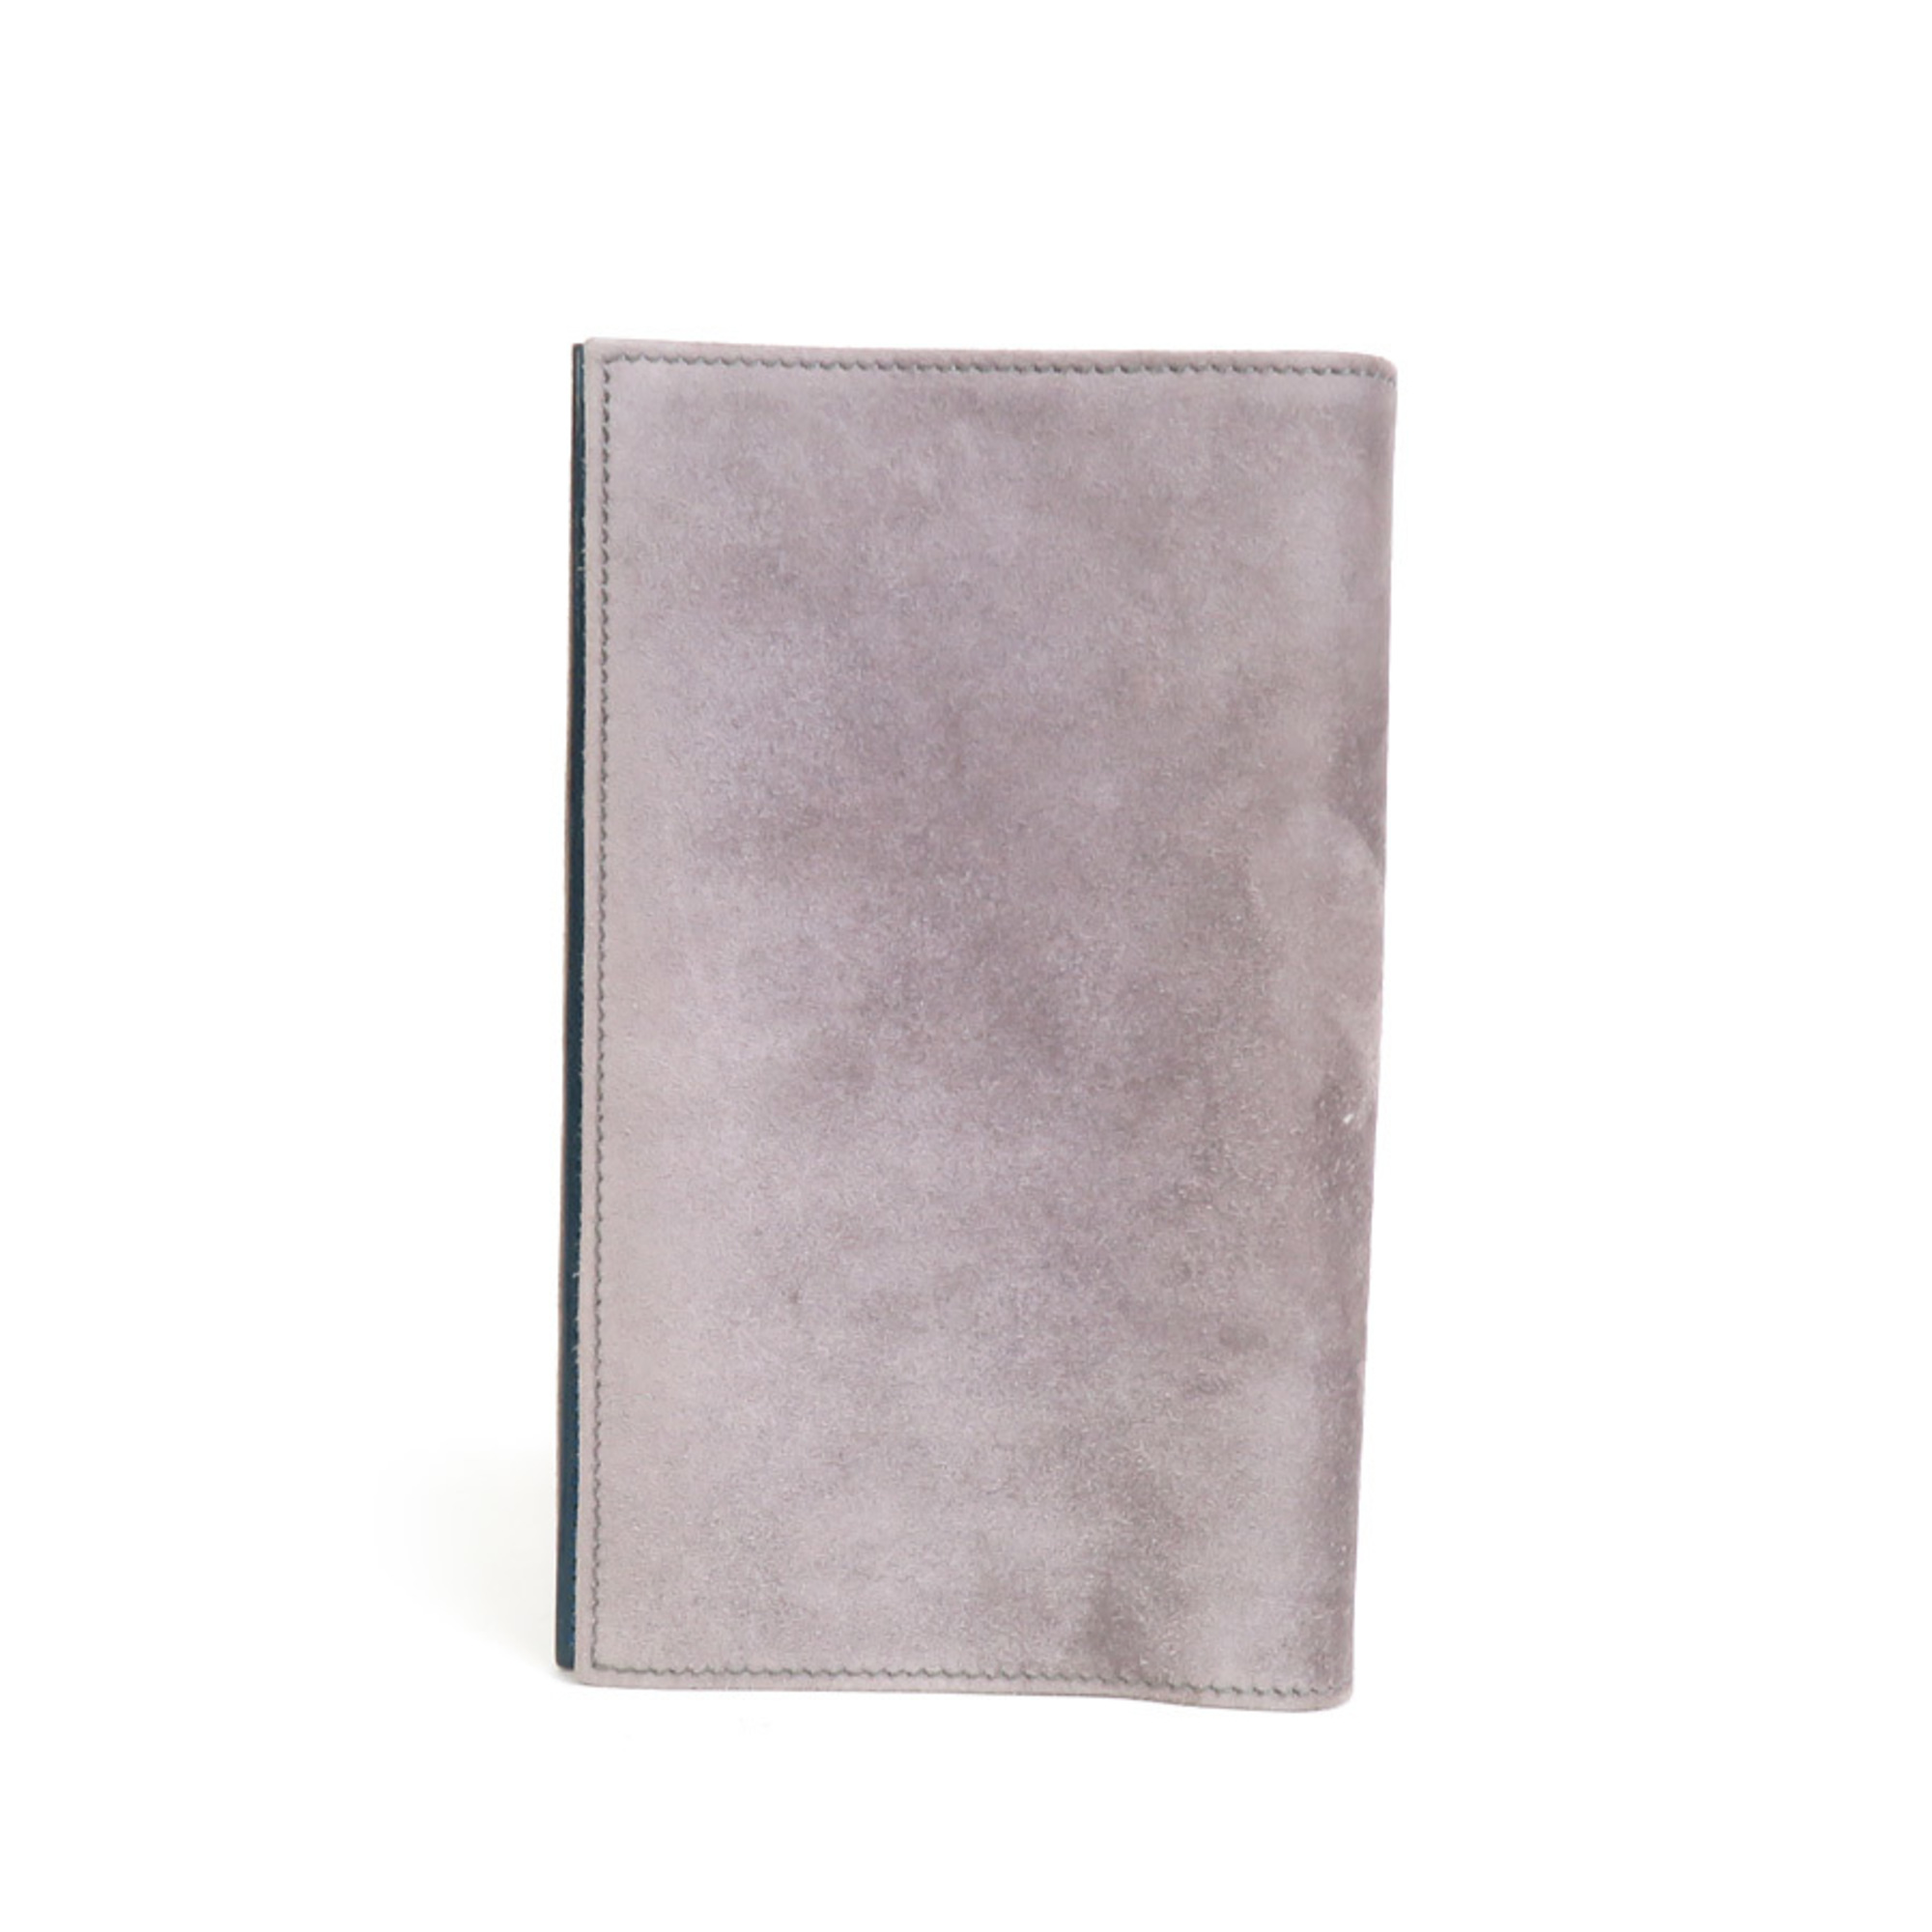 Hermes HERMES Notebook Cover Suede/Leather Gray/Dark Blue Unisex